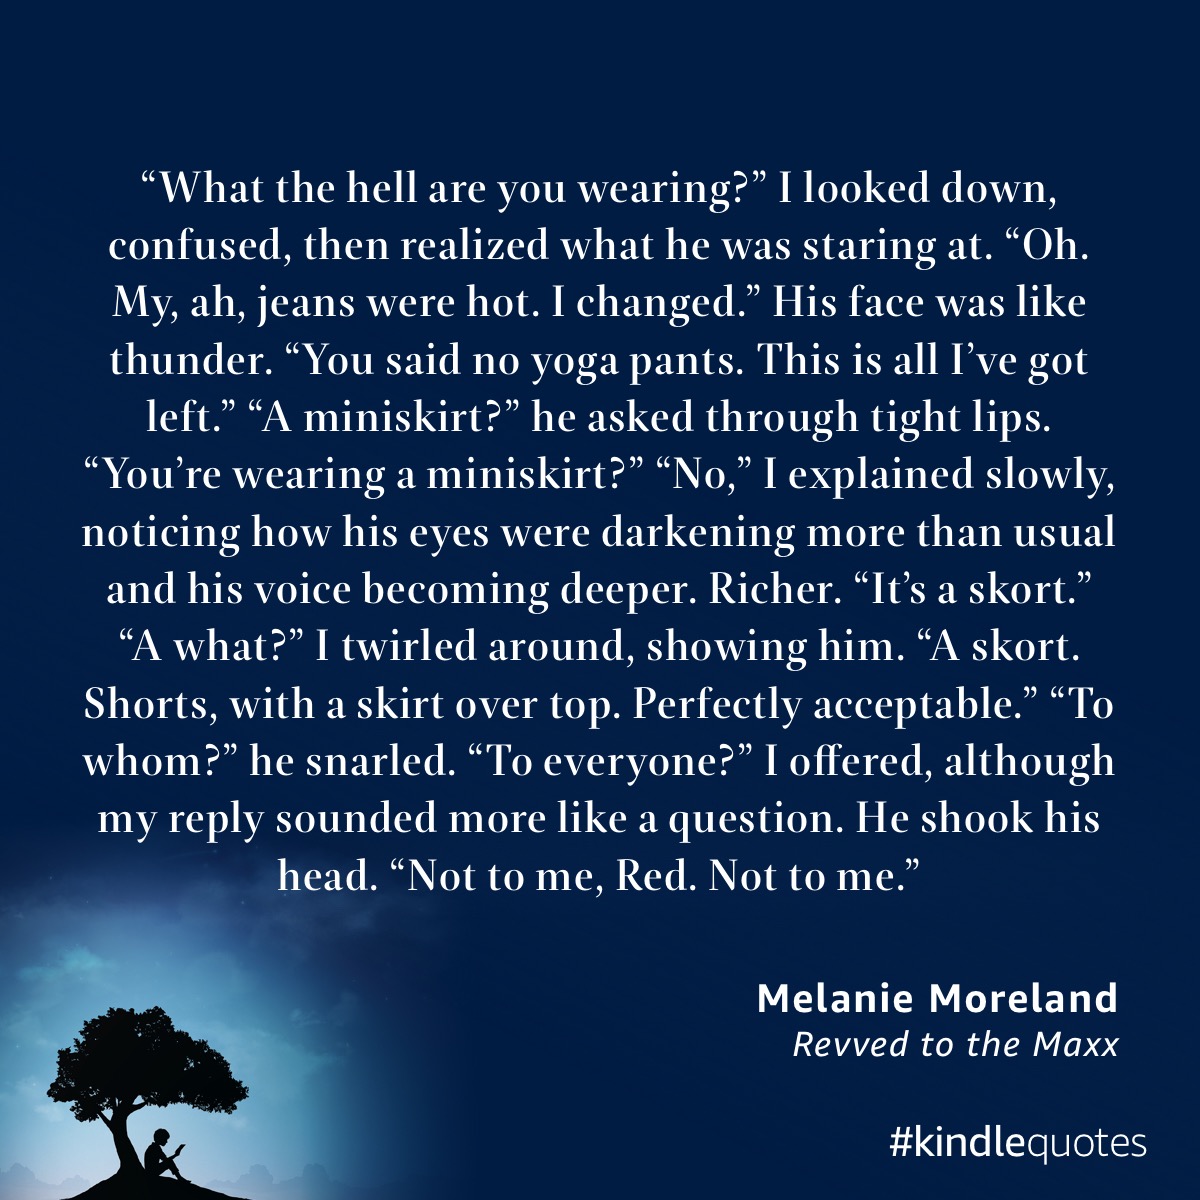 Book quote Melanie Moreland